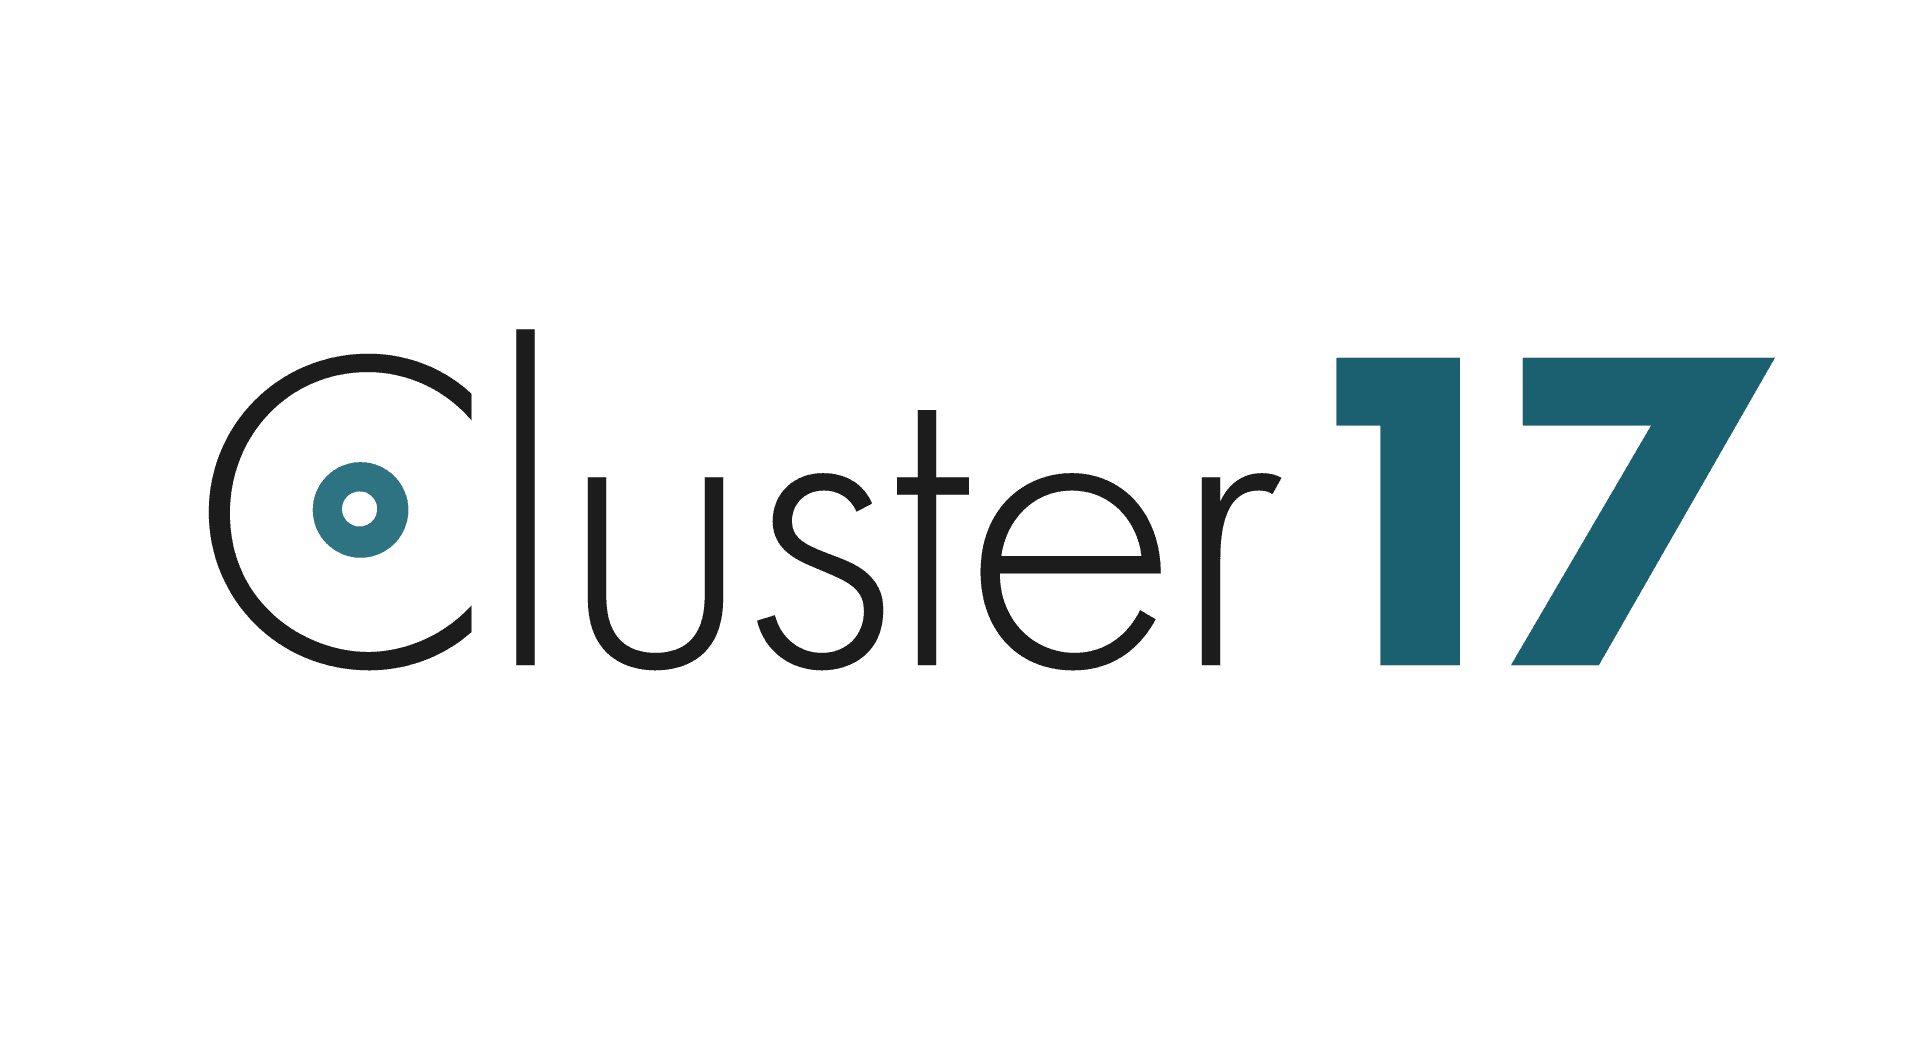 Cluster 17